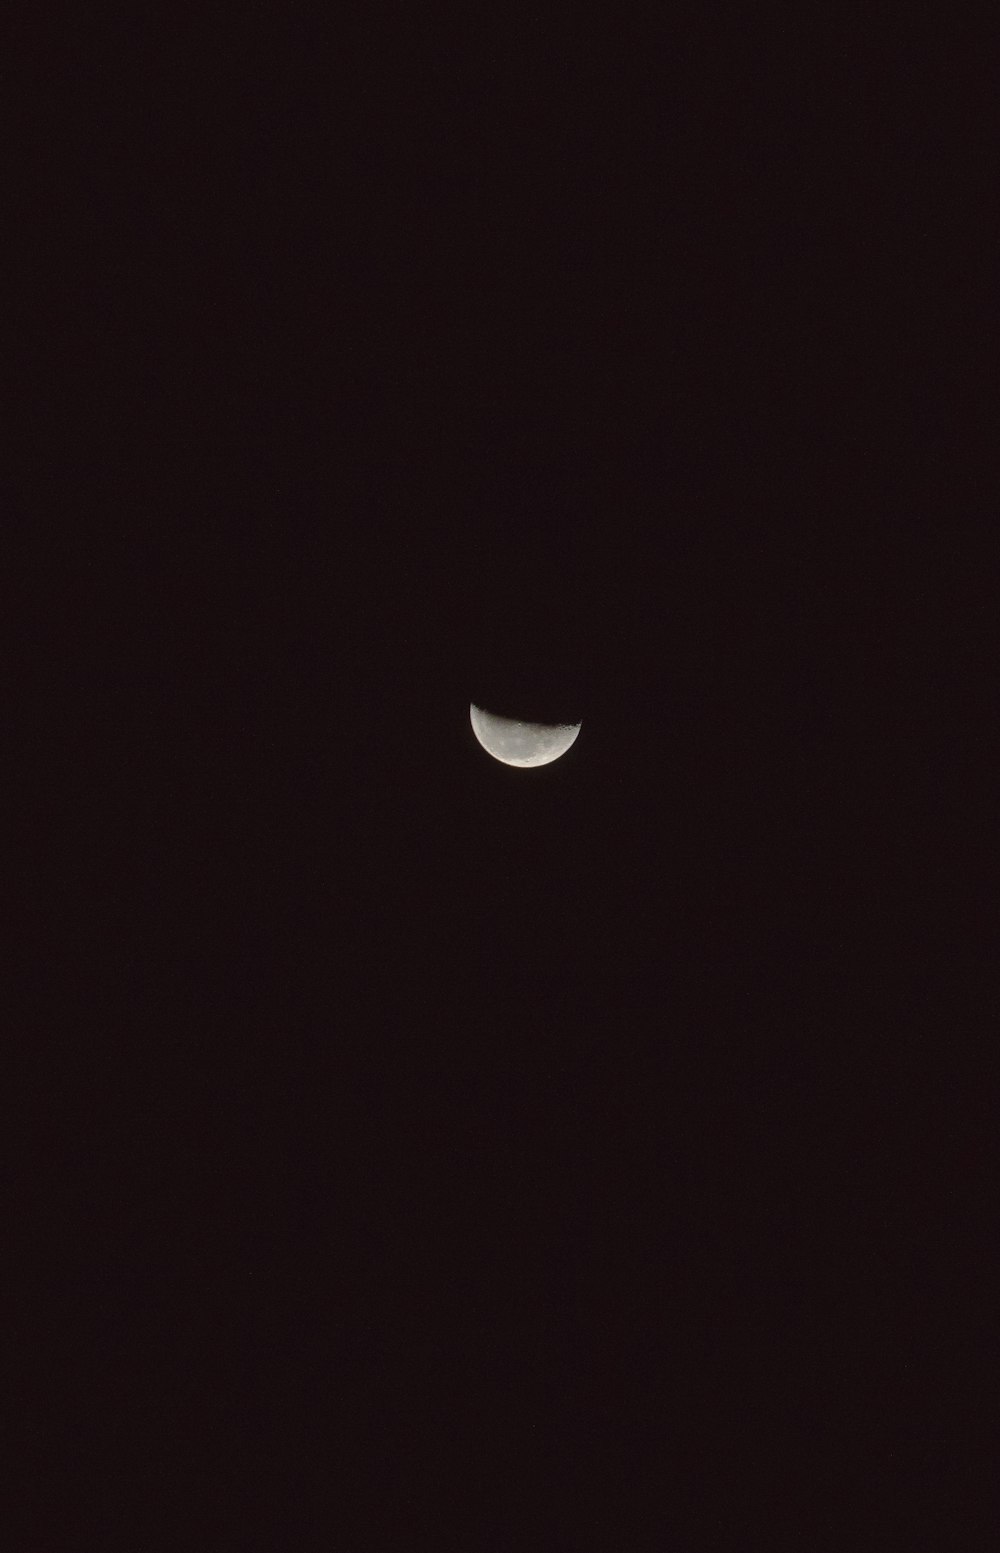 quarter moon view